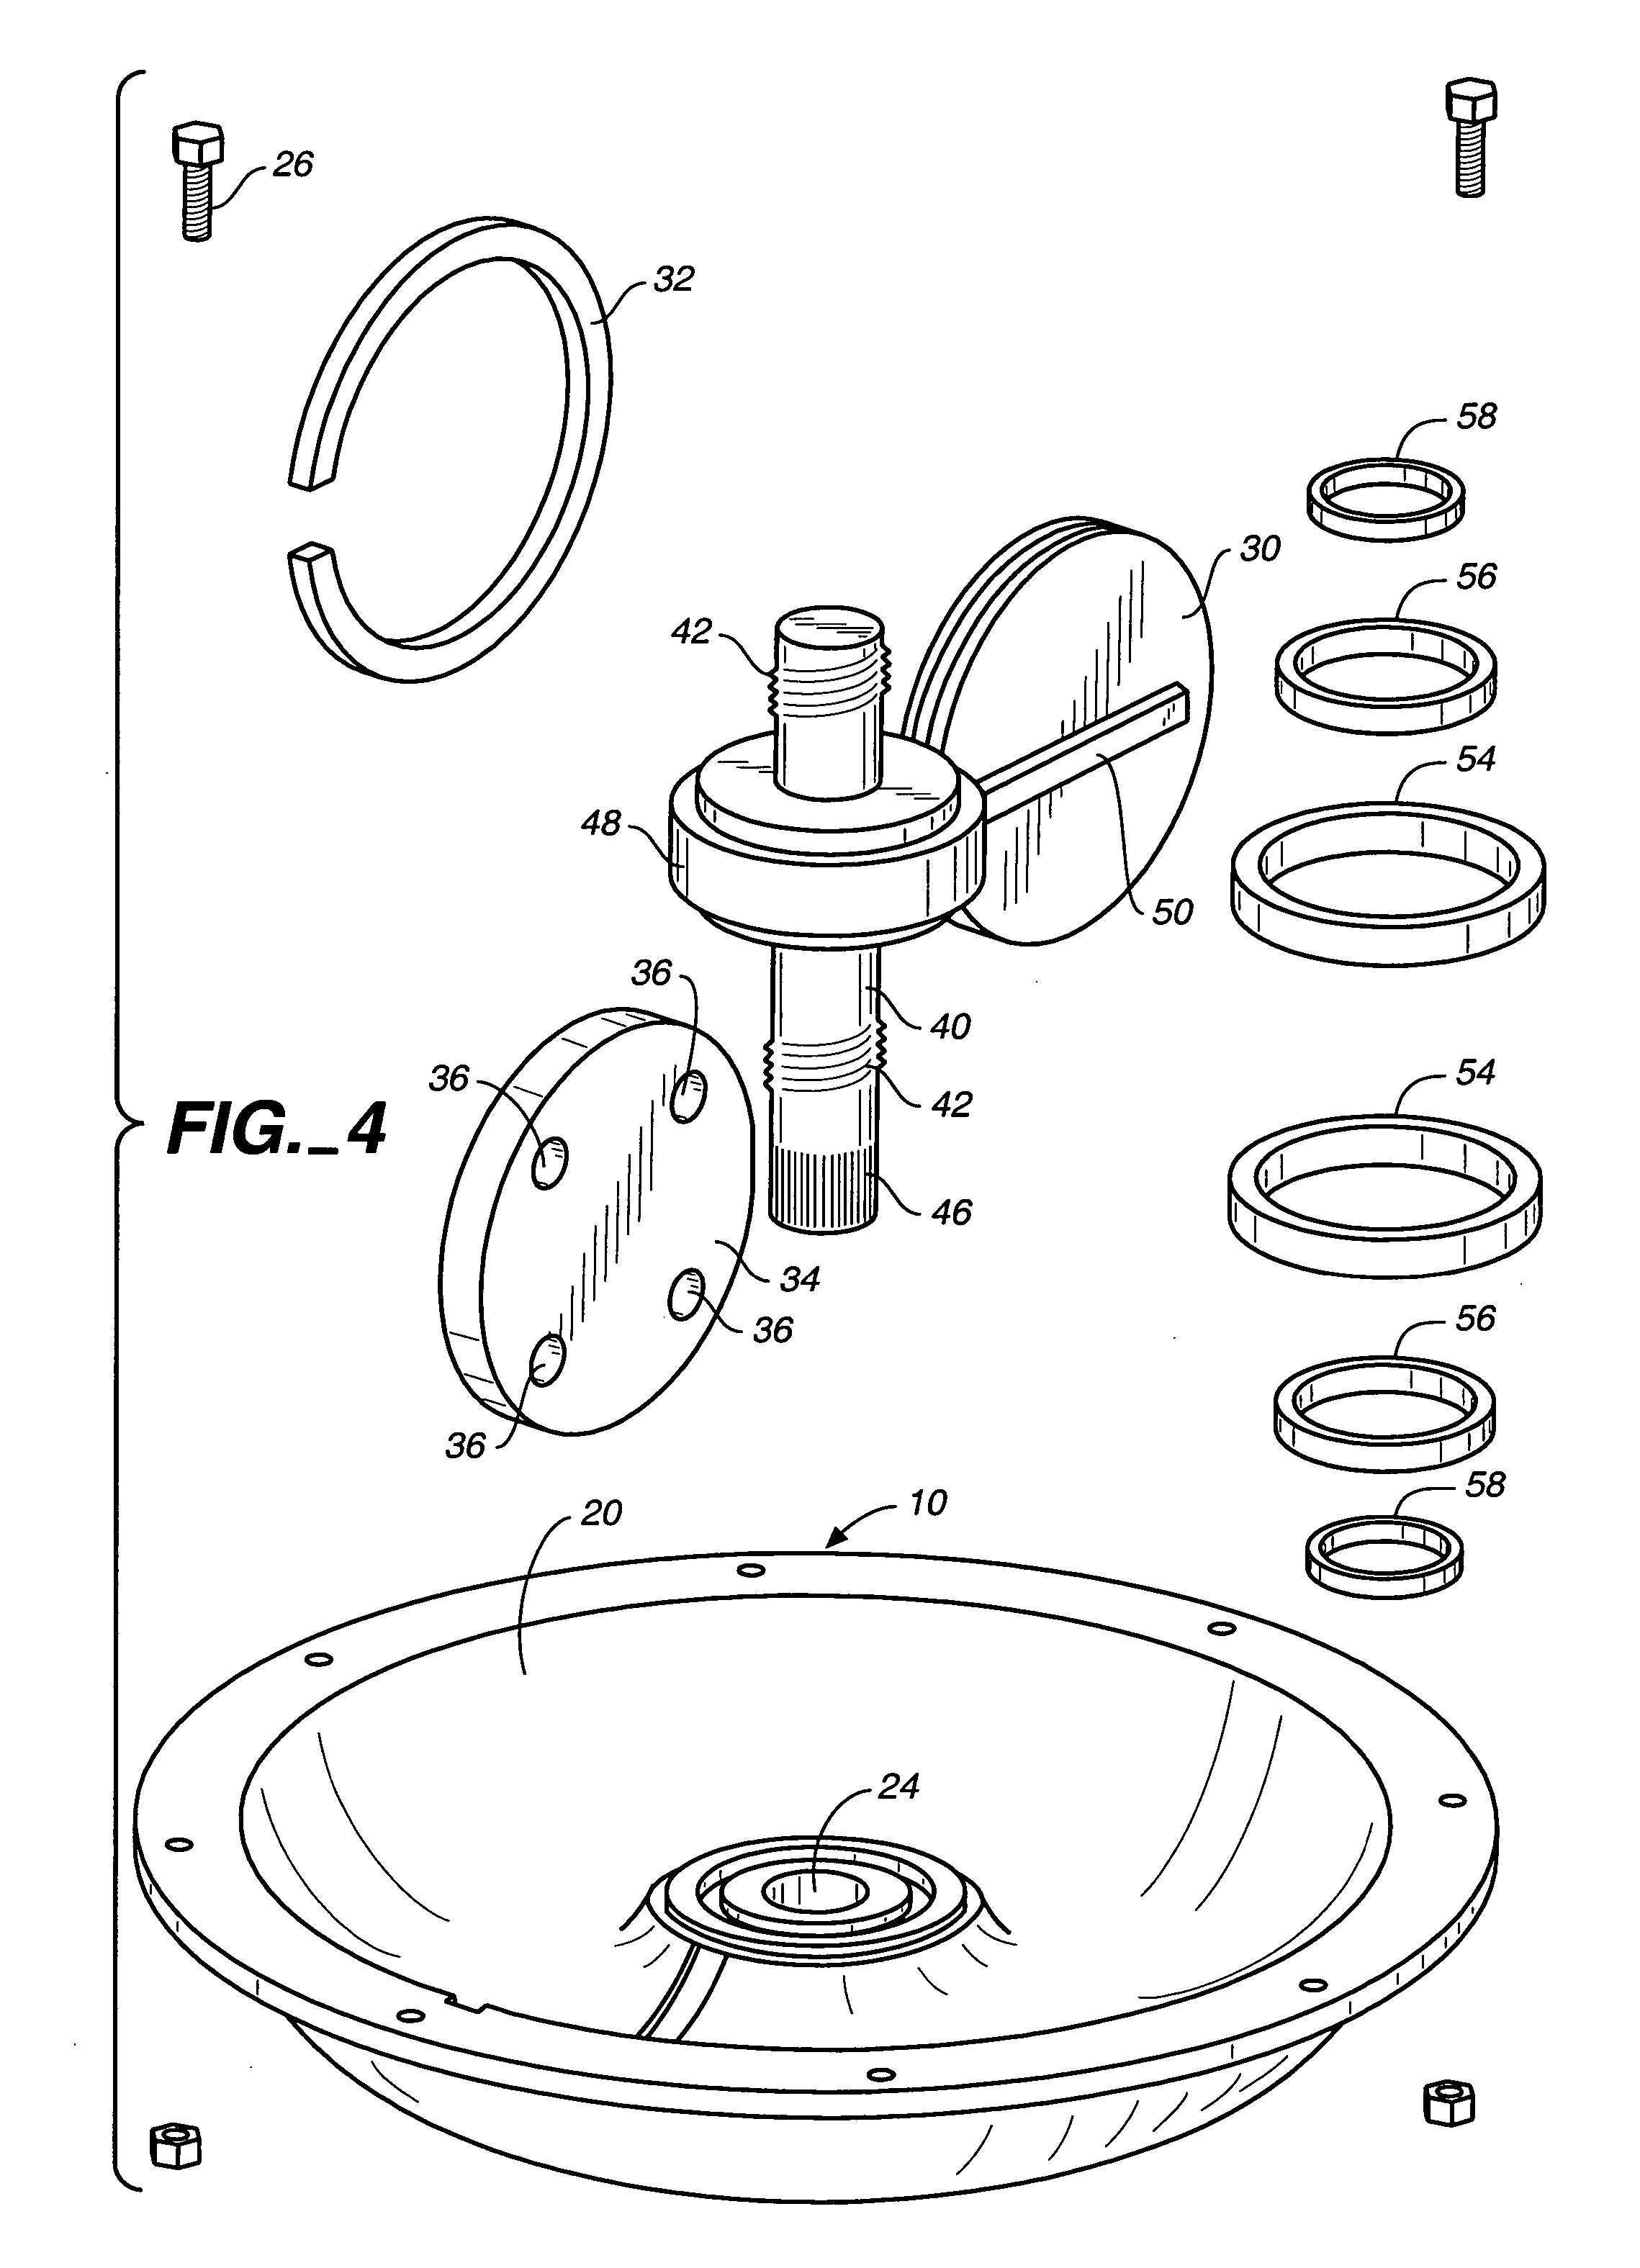 Toroidal rotary damper apparatus